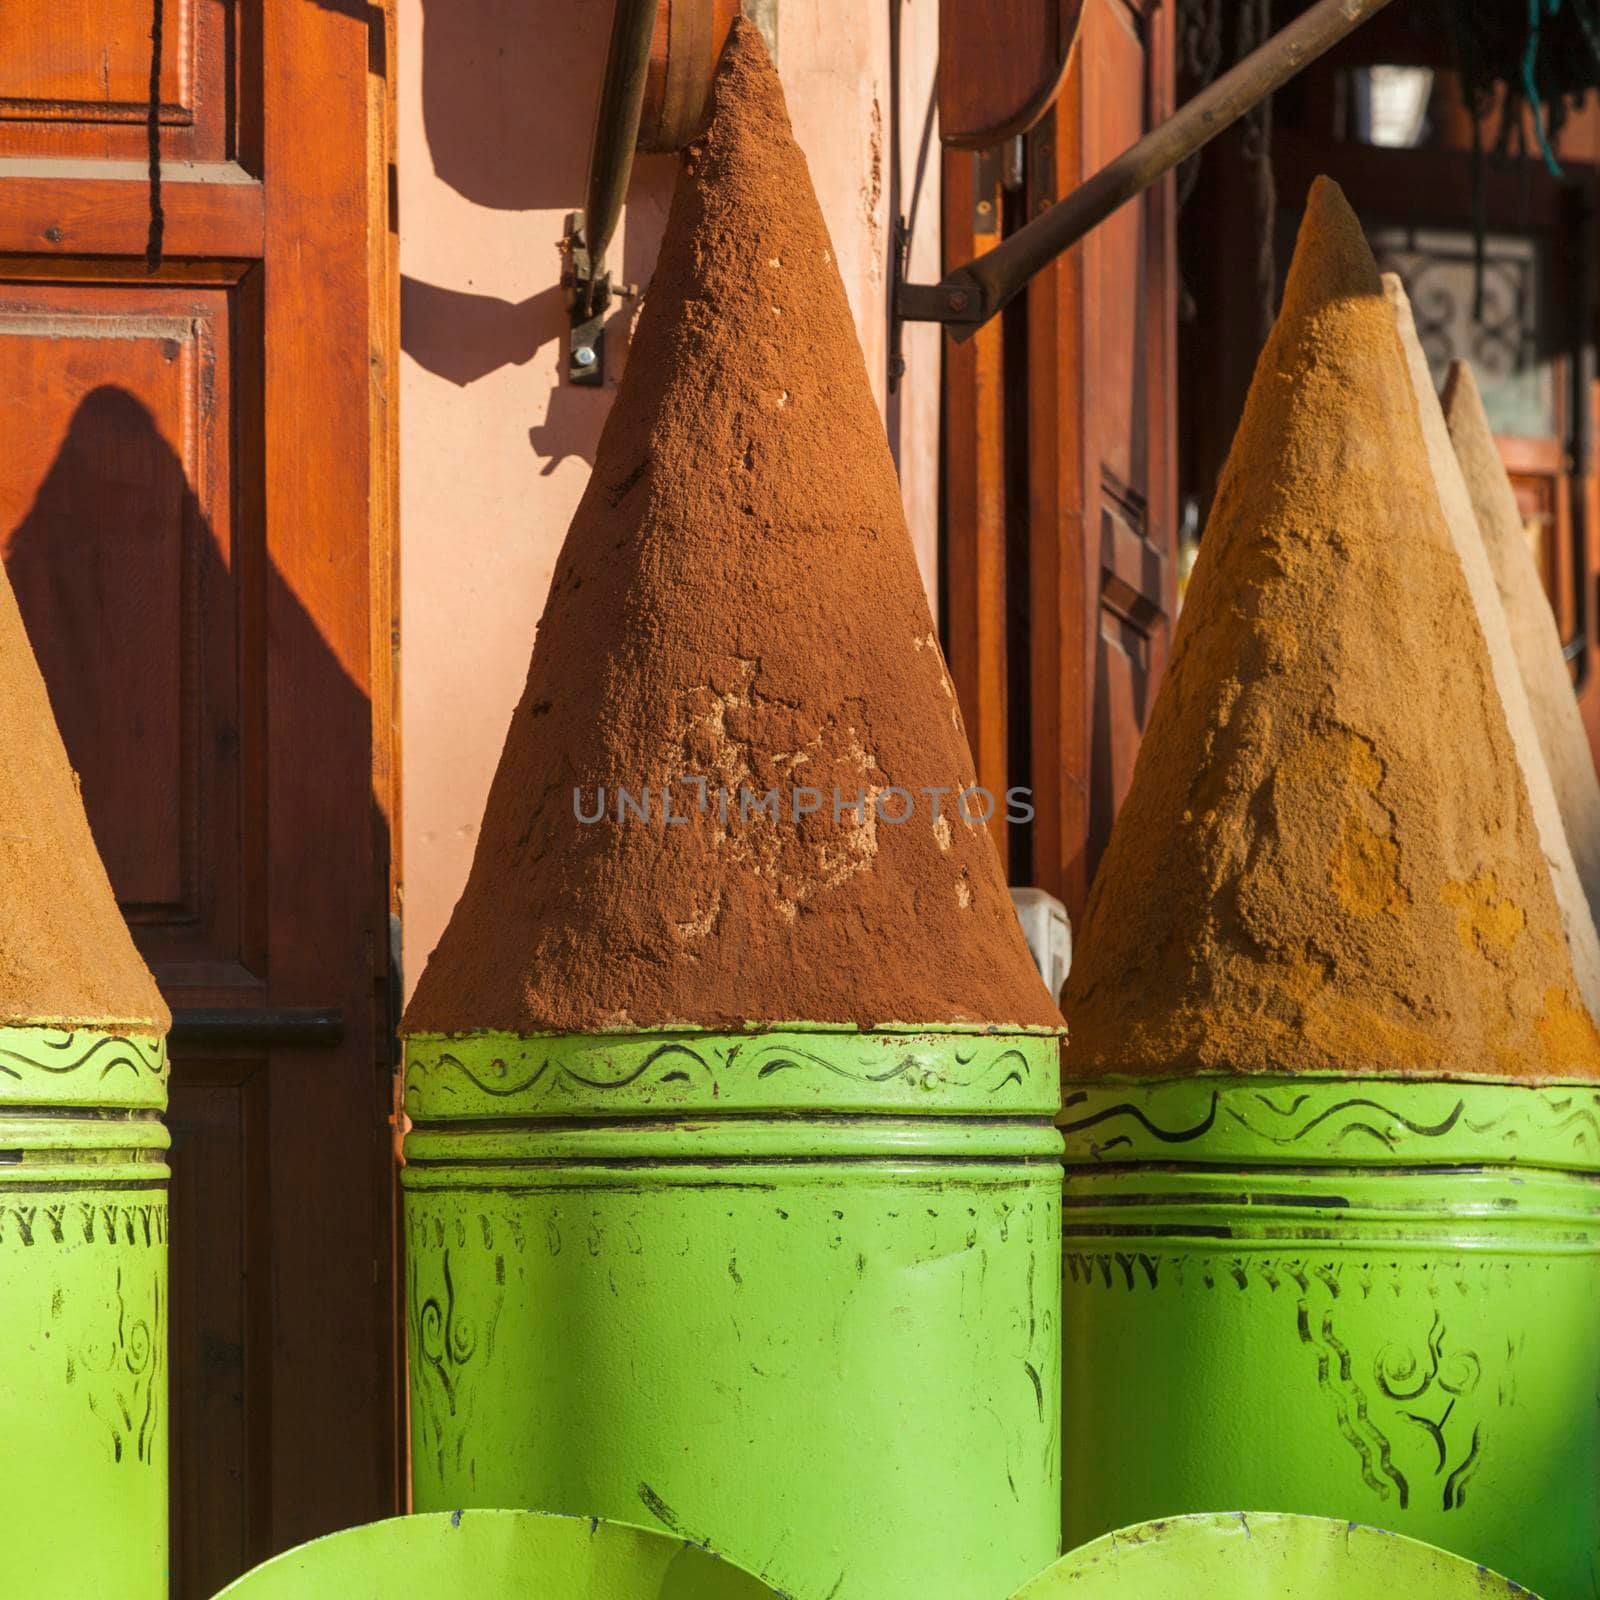 Spices Market in Marrakesh by benkrut